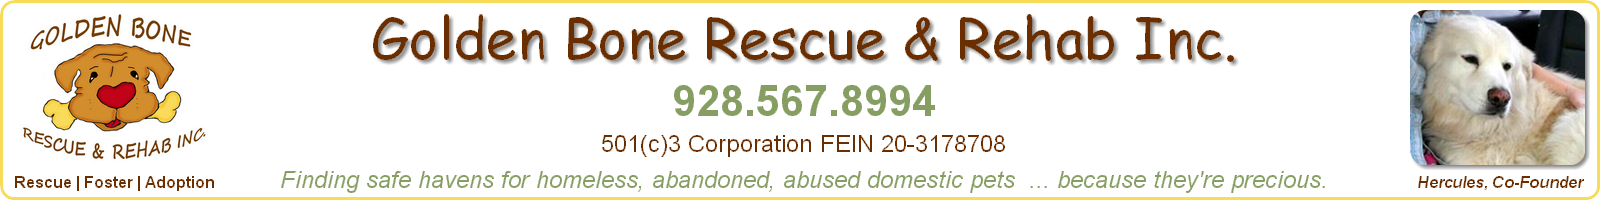 Pet Memorial Wall - Golden Bone Rescue & Rehab, Inc., Sedona, Arizona